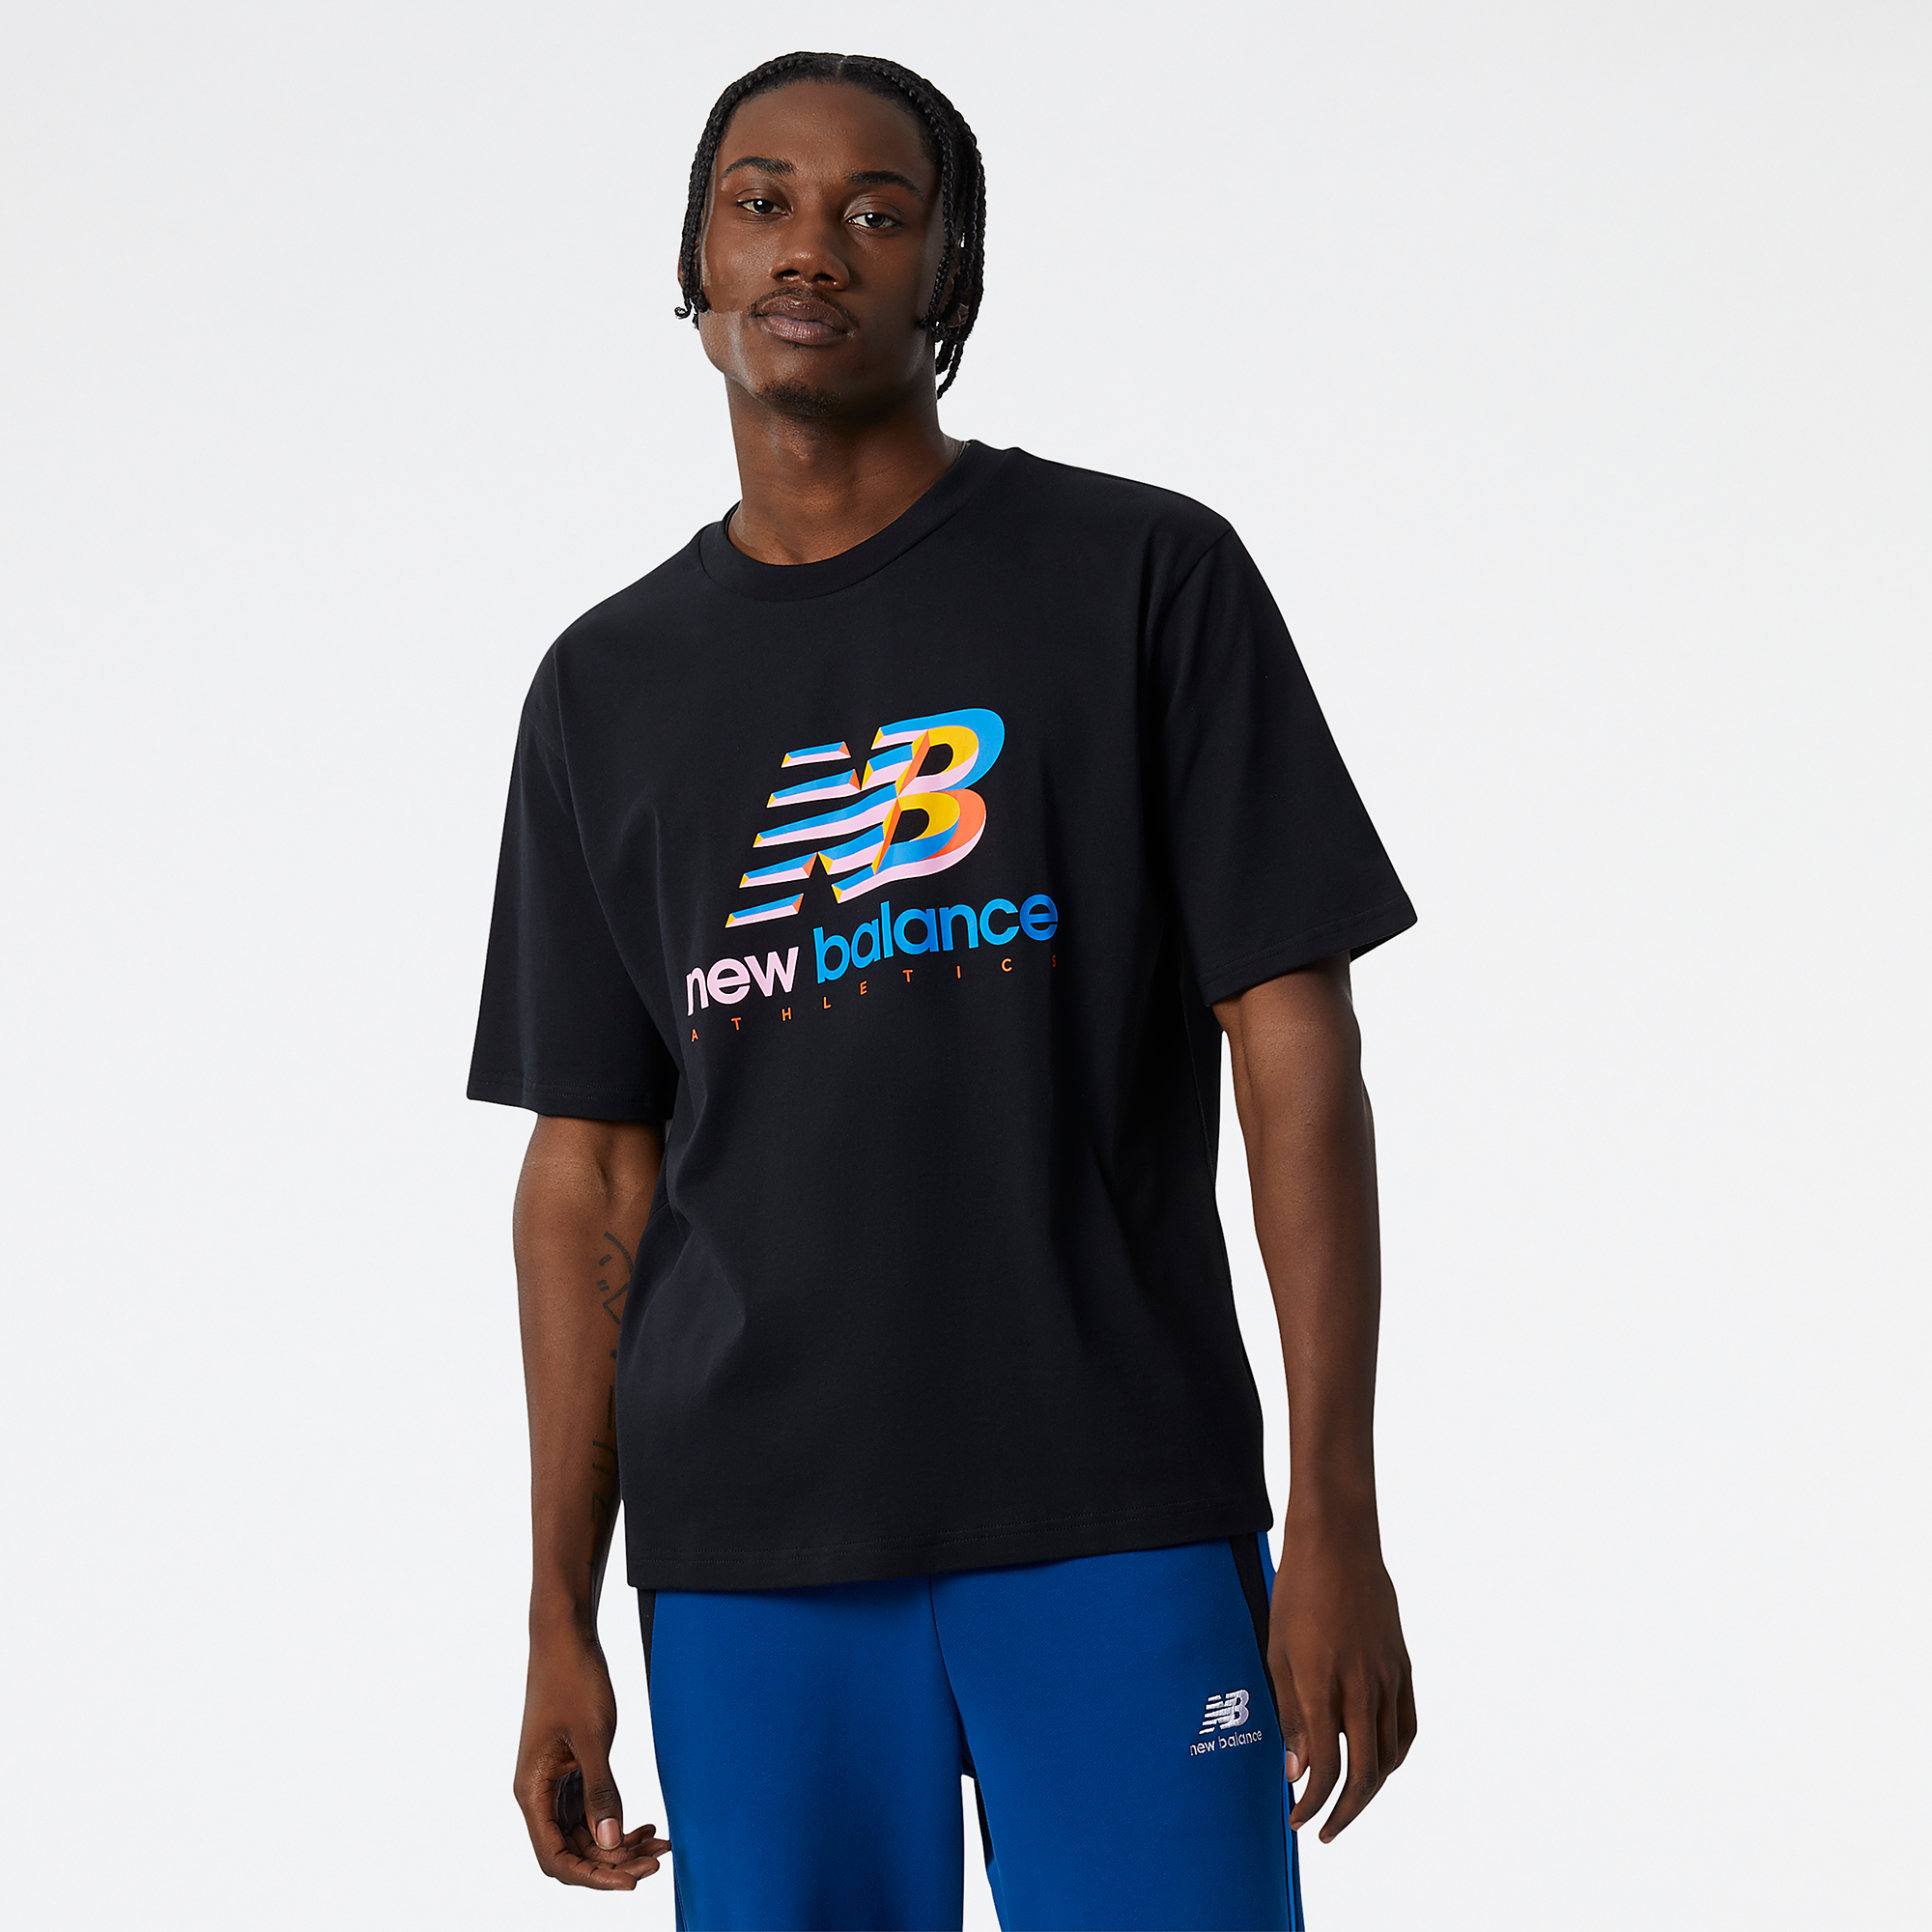 New Balance Athletics T-Shirt - Men's